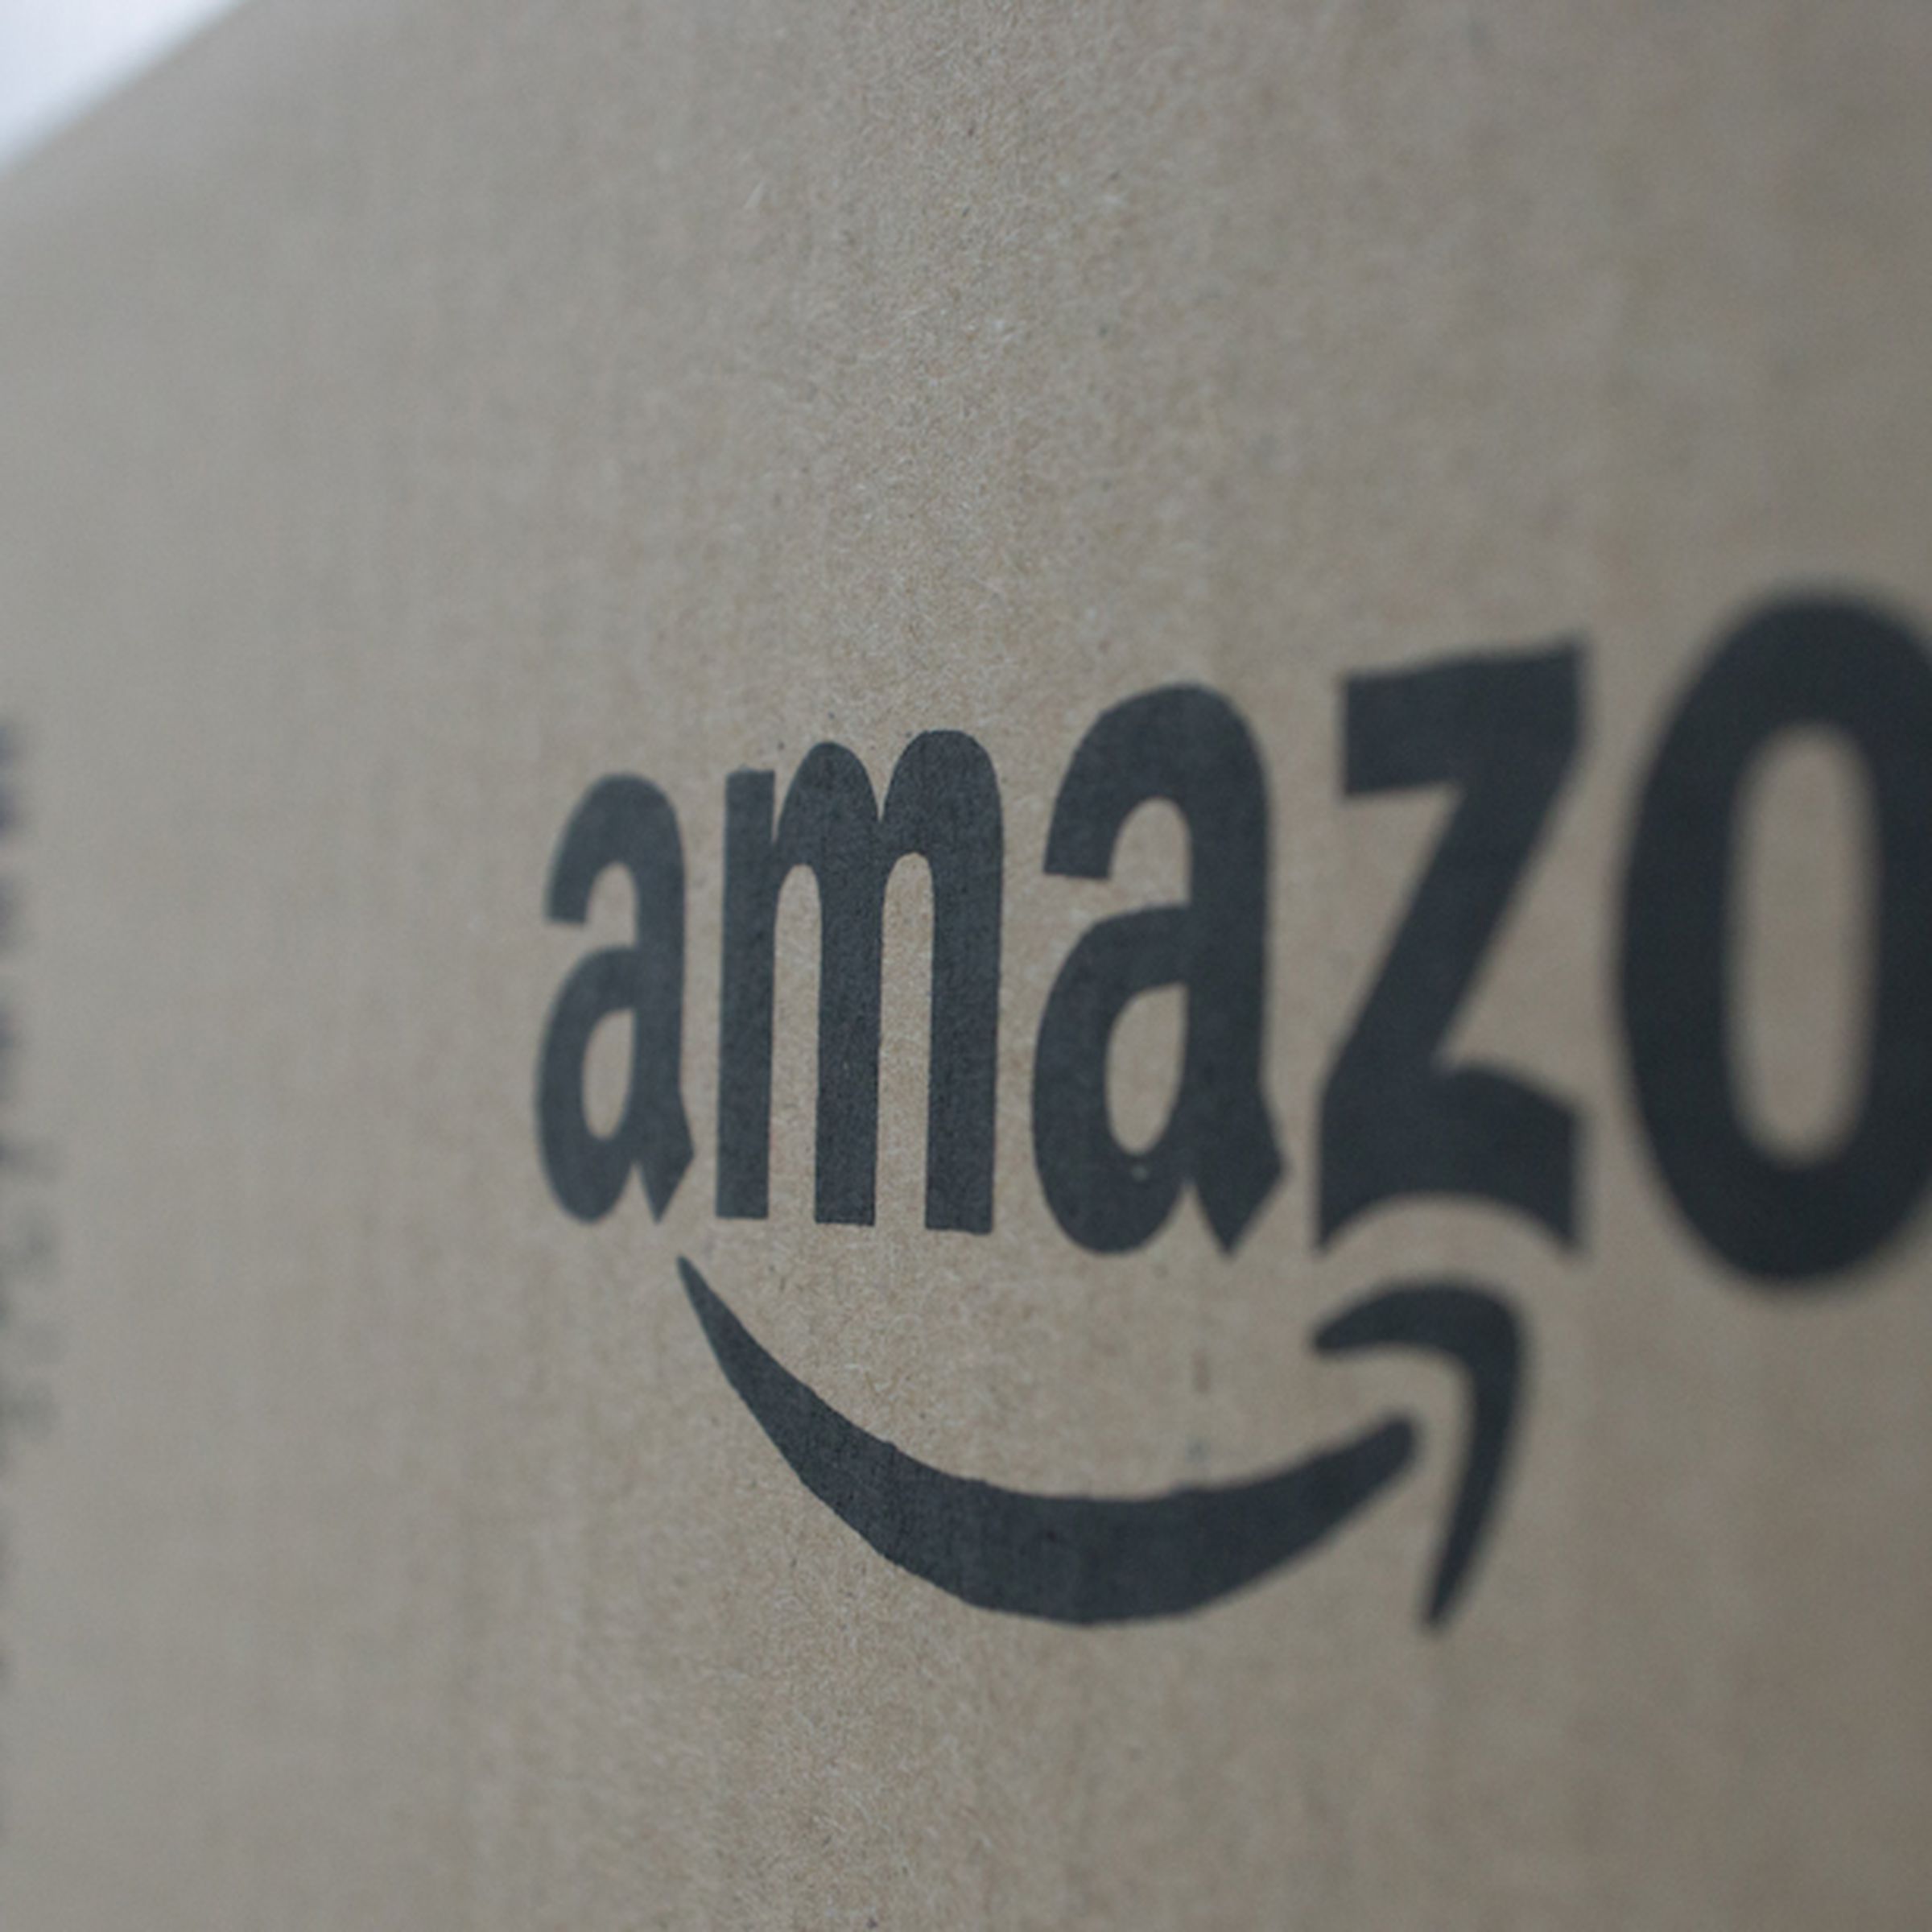 A photo showing a cardboard Amazon shipping box